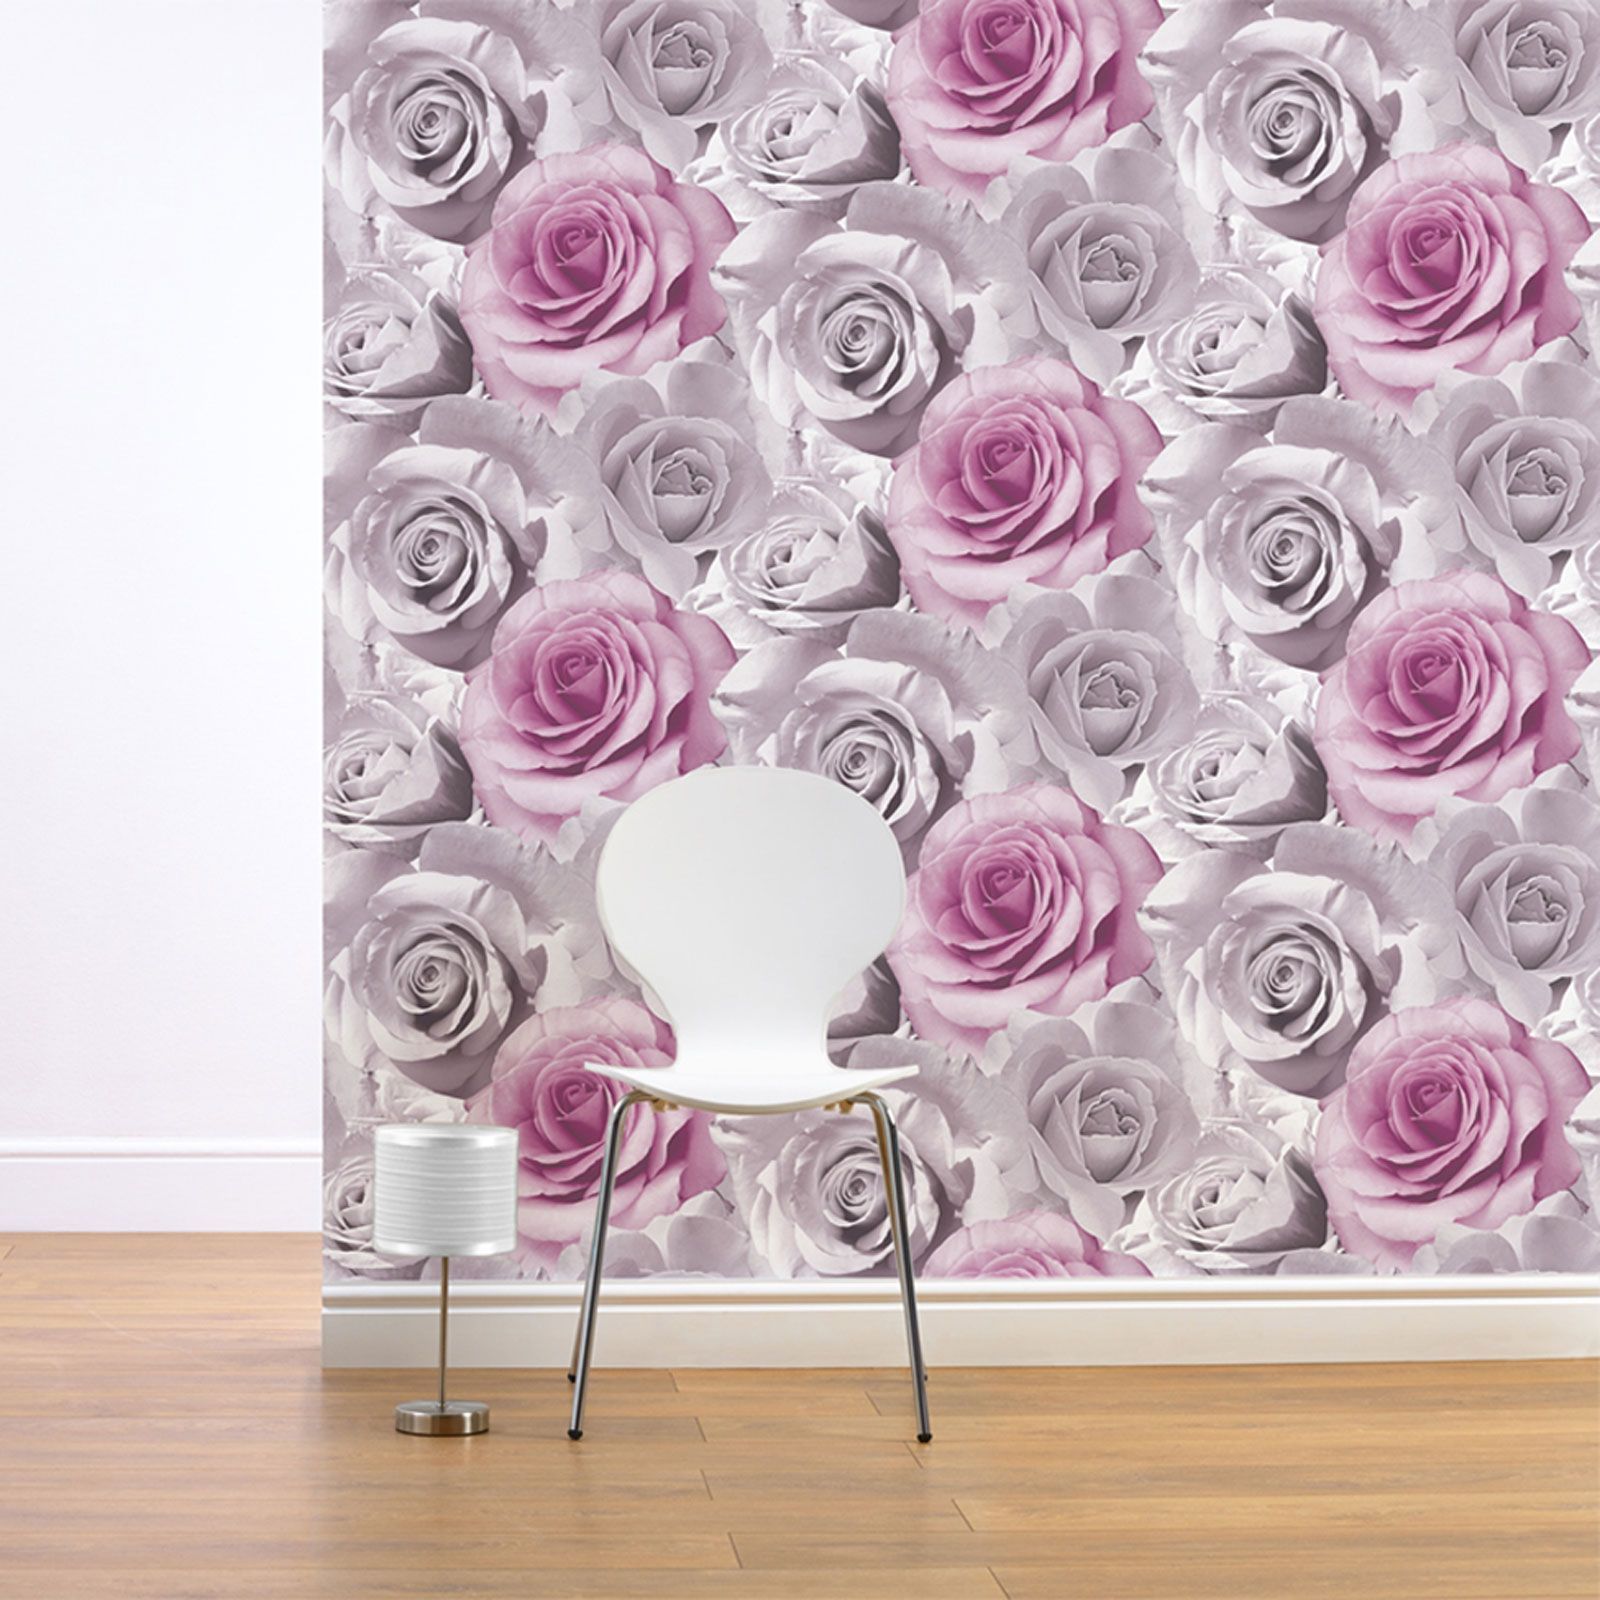 Rose Wallpaper For Bedroom - HD Wallpaper 